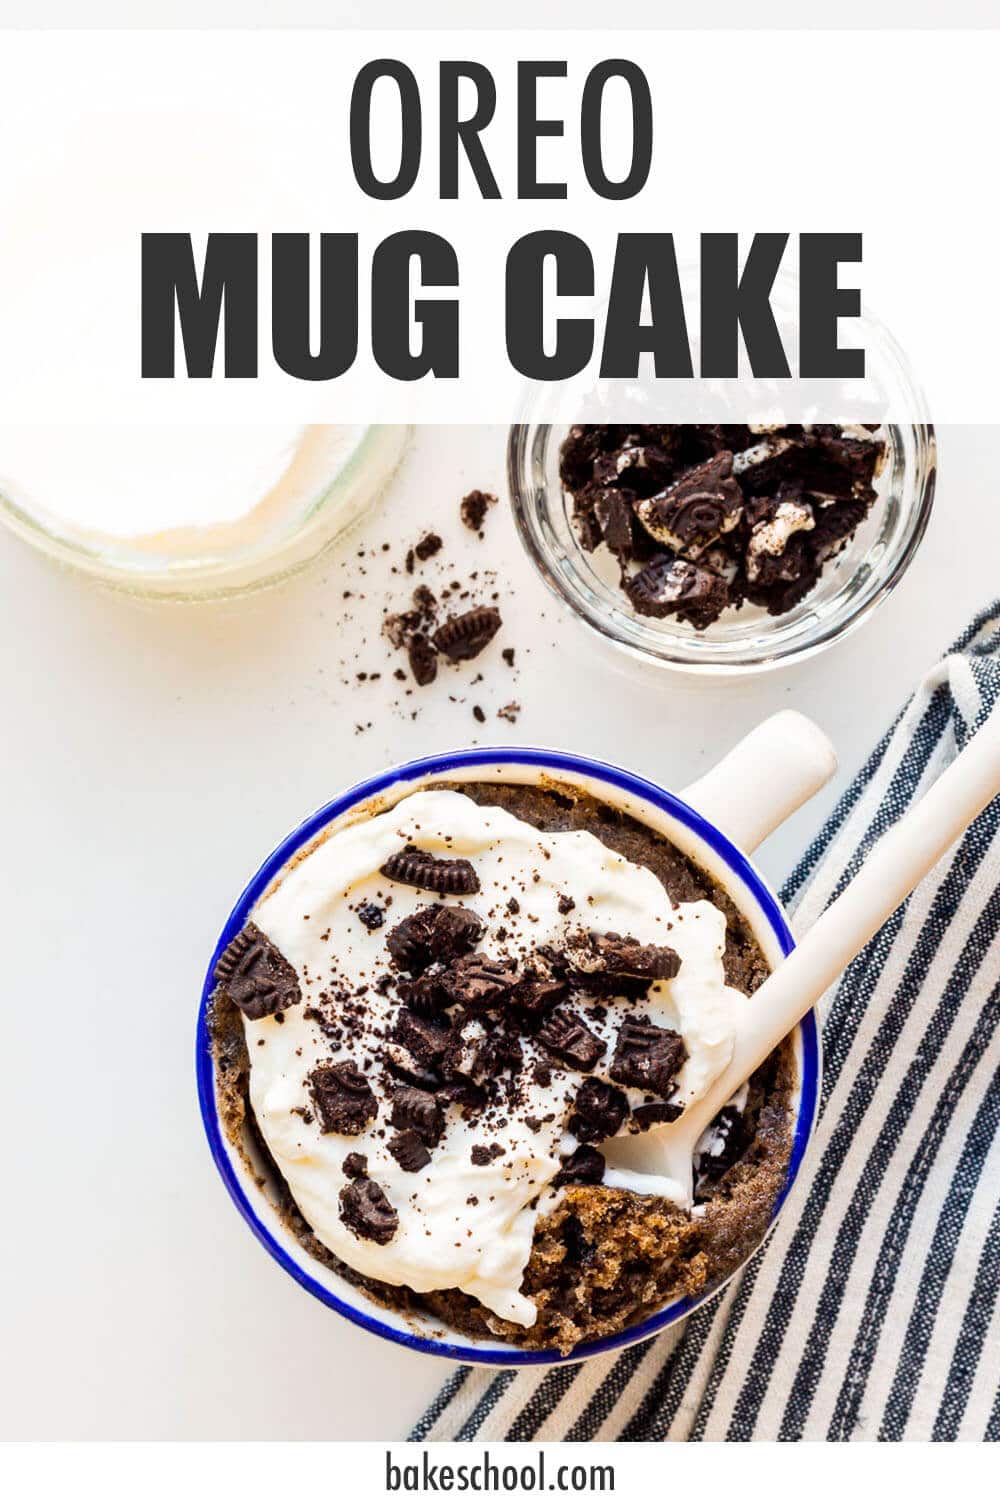 Image of Oreo mug cake topped with whipped cream and crushed Oreo cookies.